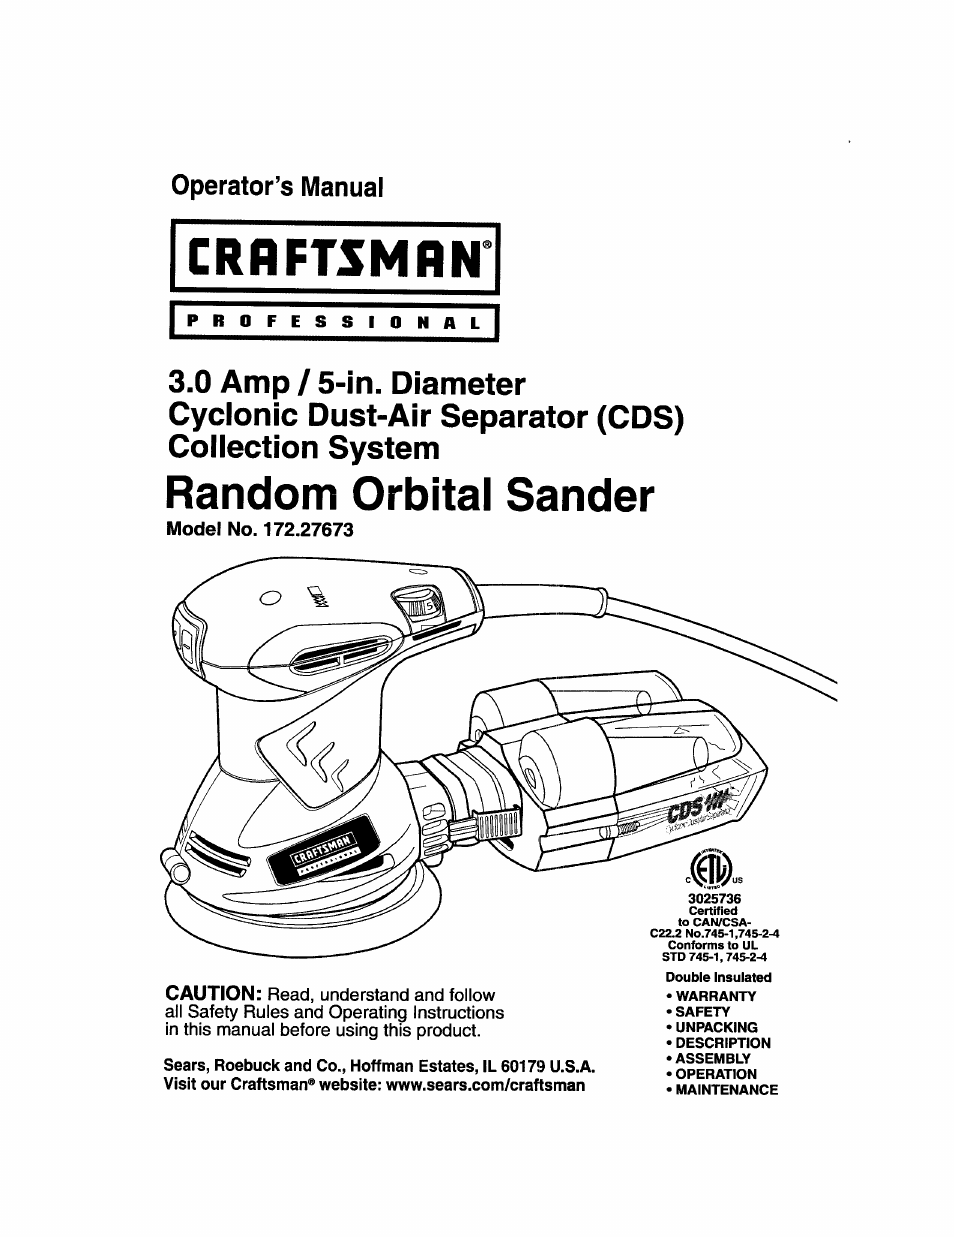 Craftsman 172.27673 User Manual | 52 pages